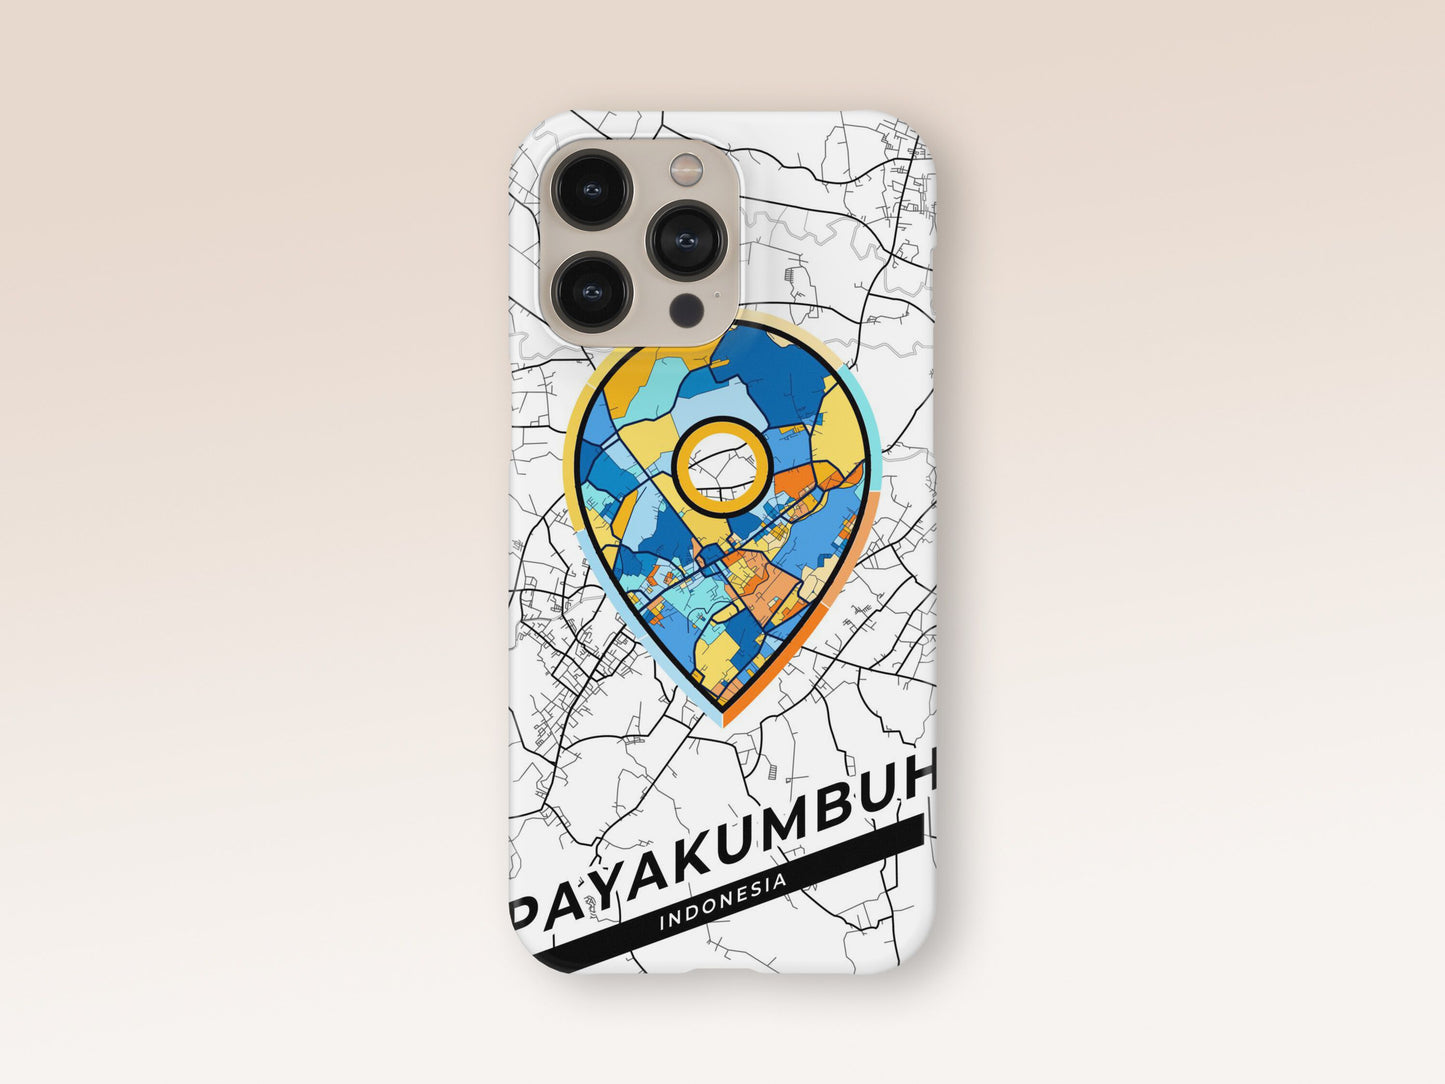 Payakumbuh Indonesia slim phone case with colorful icon 1